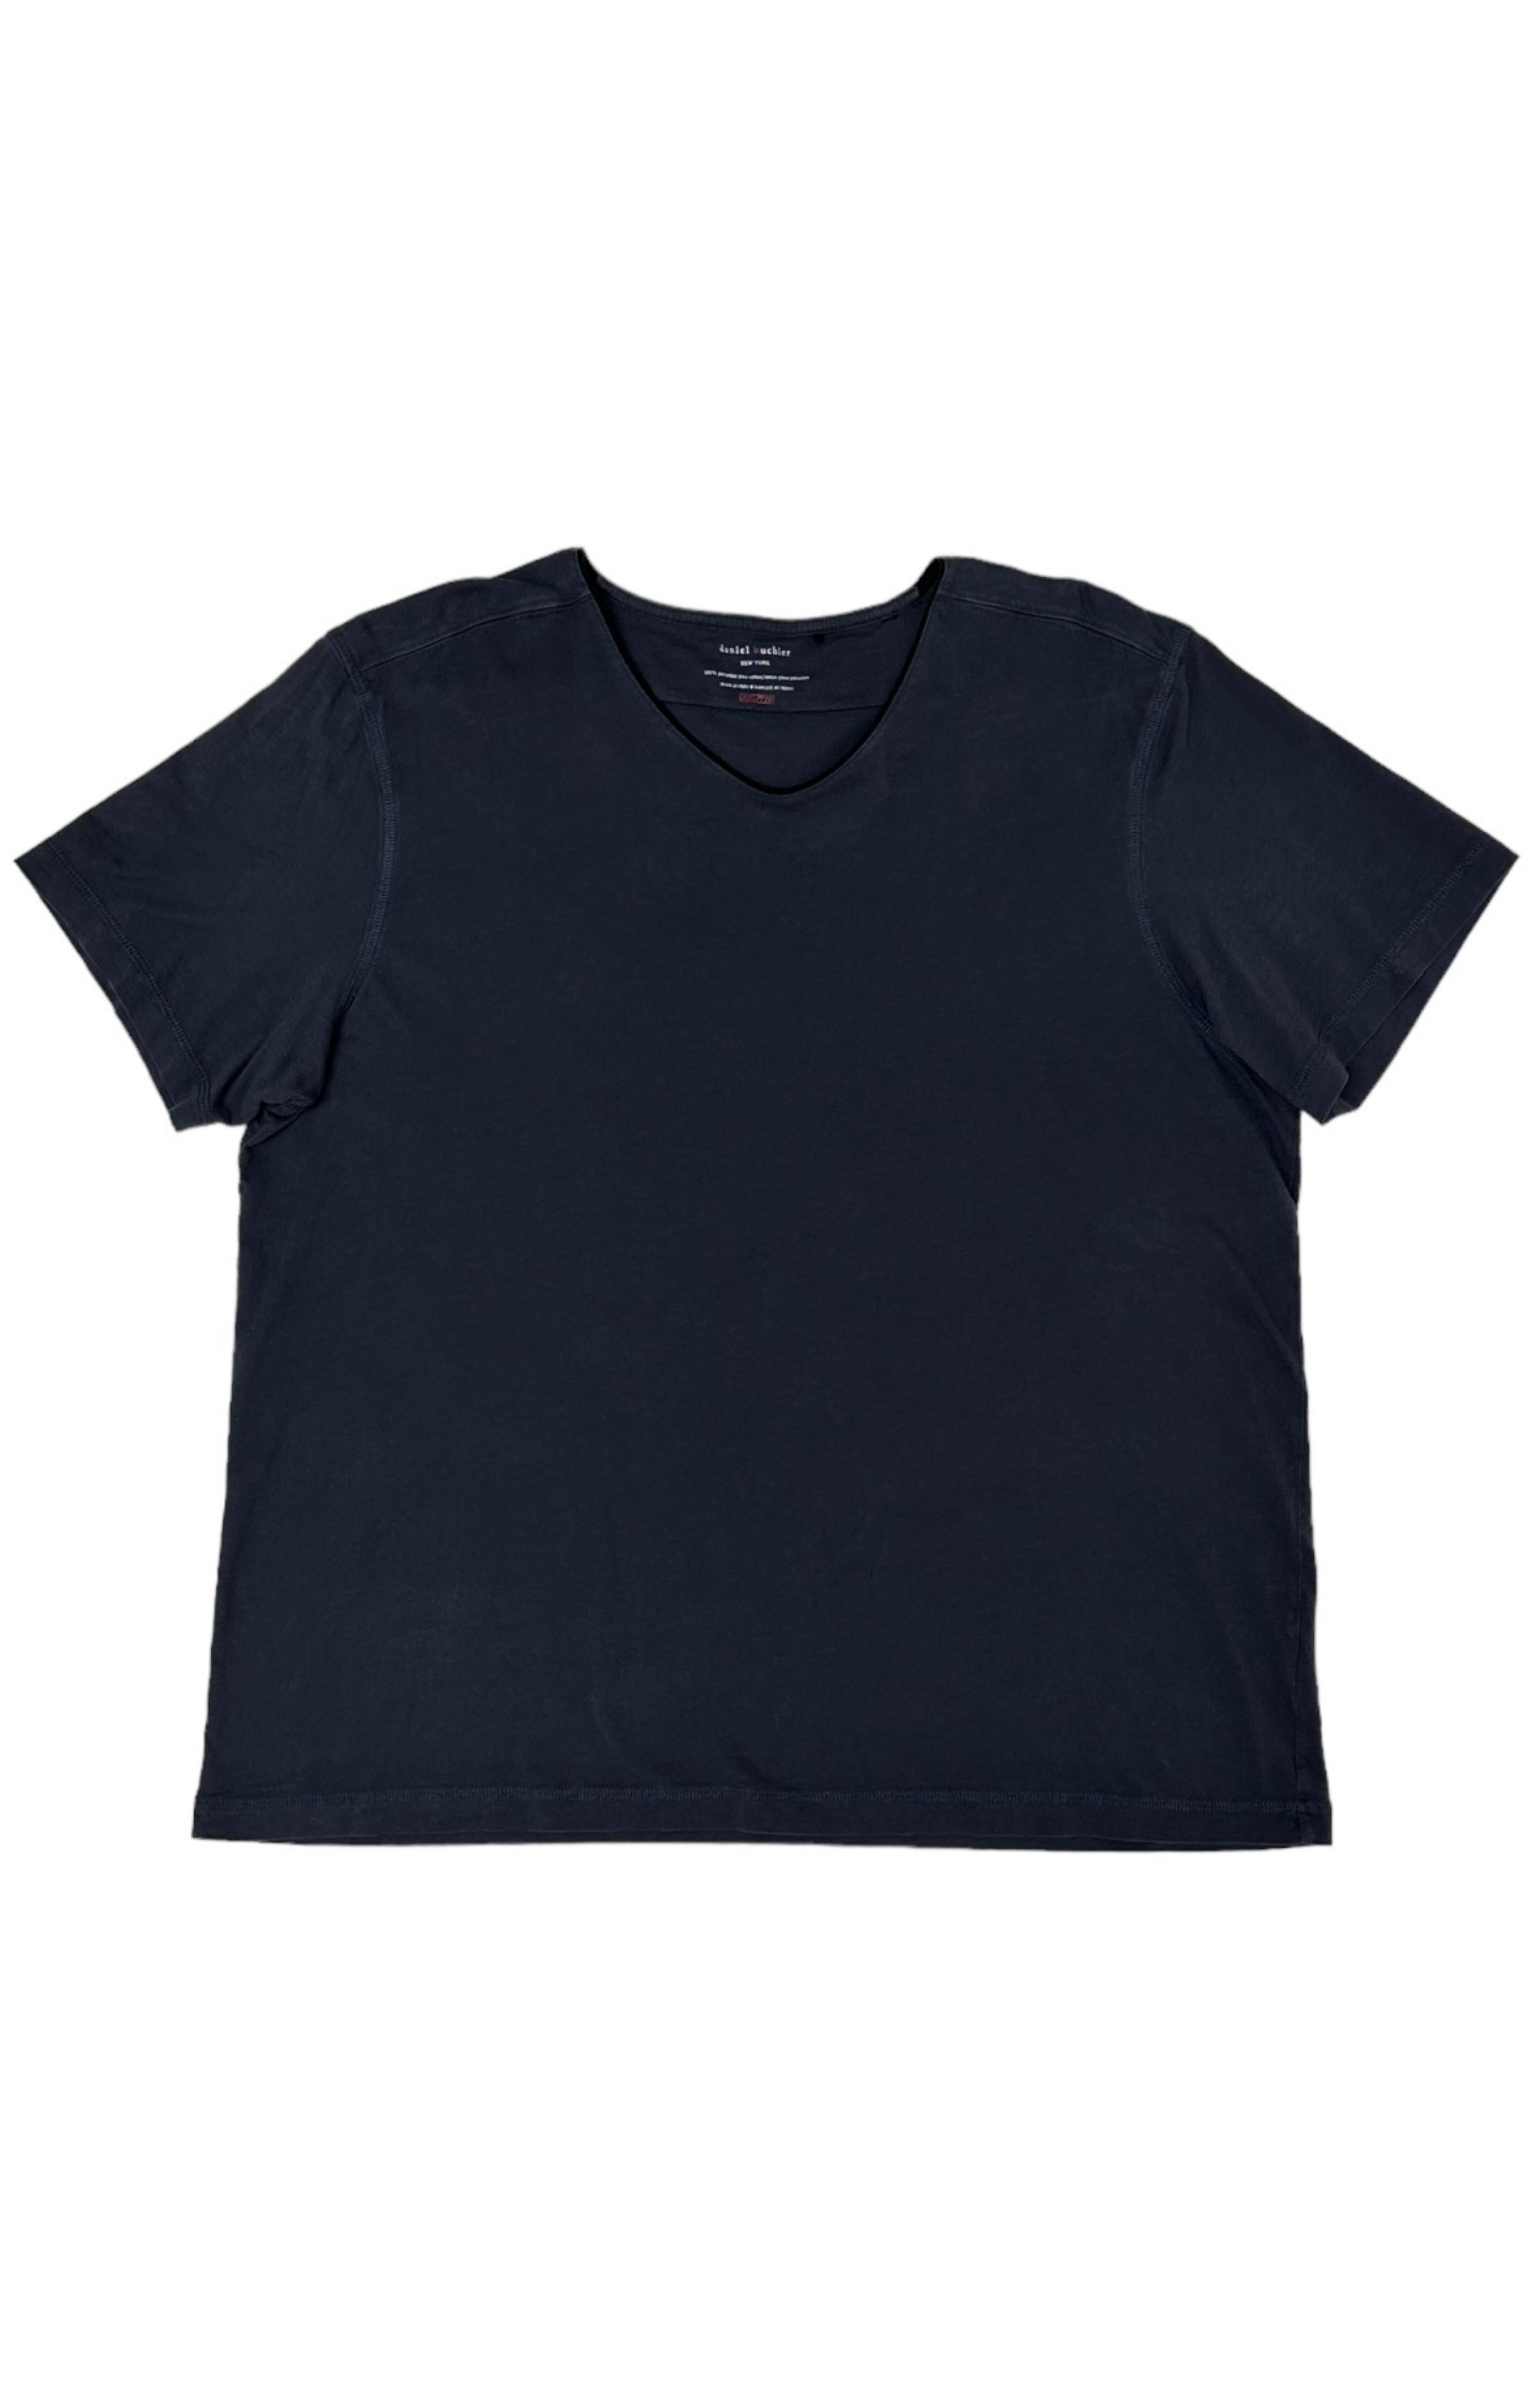 DANIEL BUCHLER T-shirt Size: 2XL